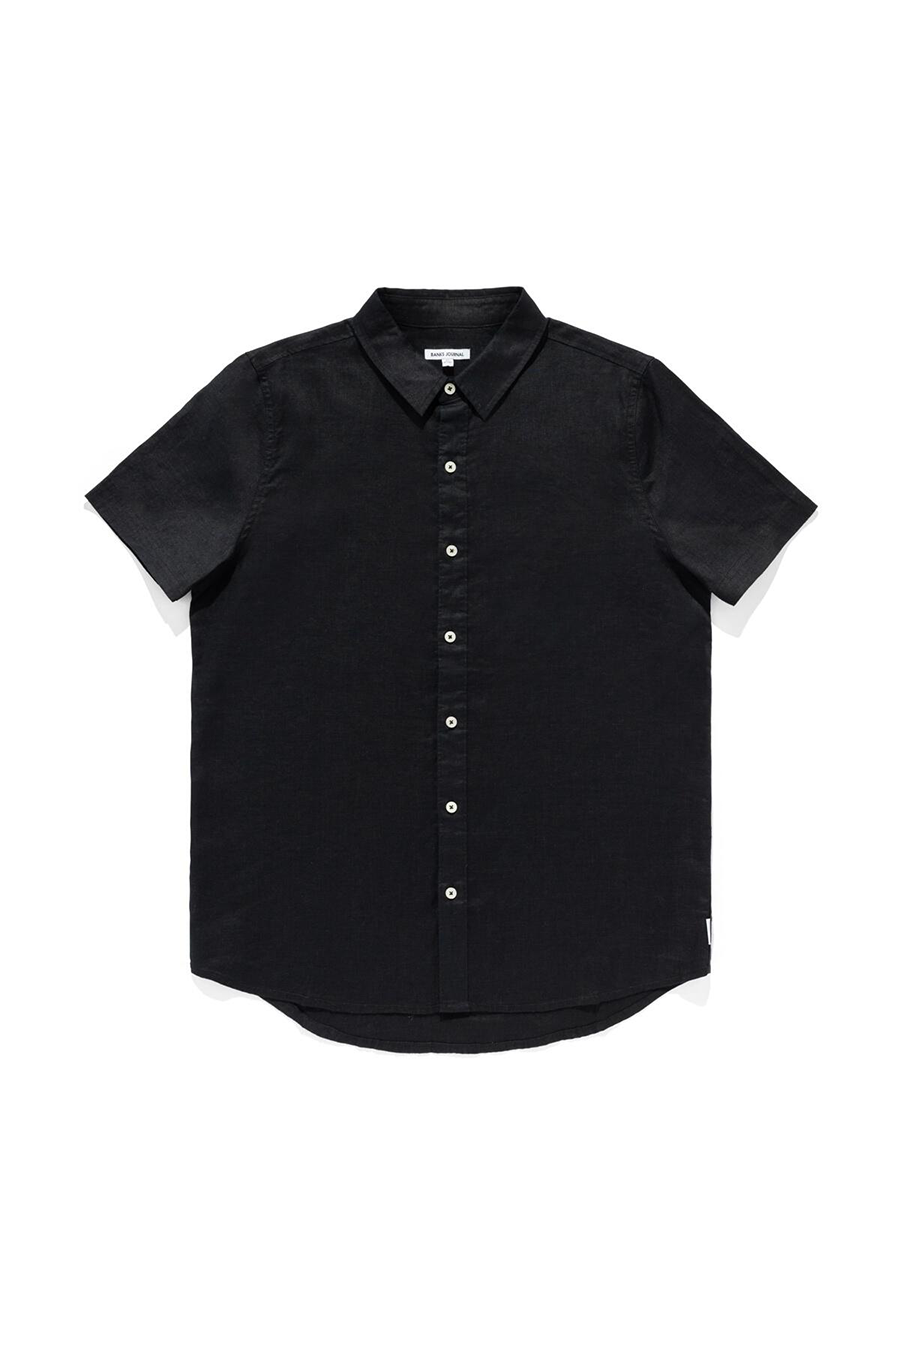 Hastings Short Sleeve Shirt | Black - Main Image Number 1 of 1